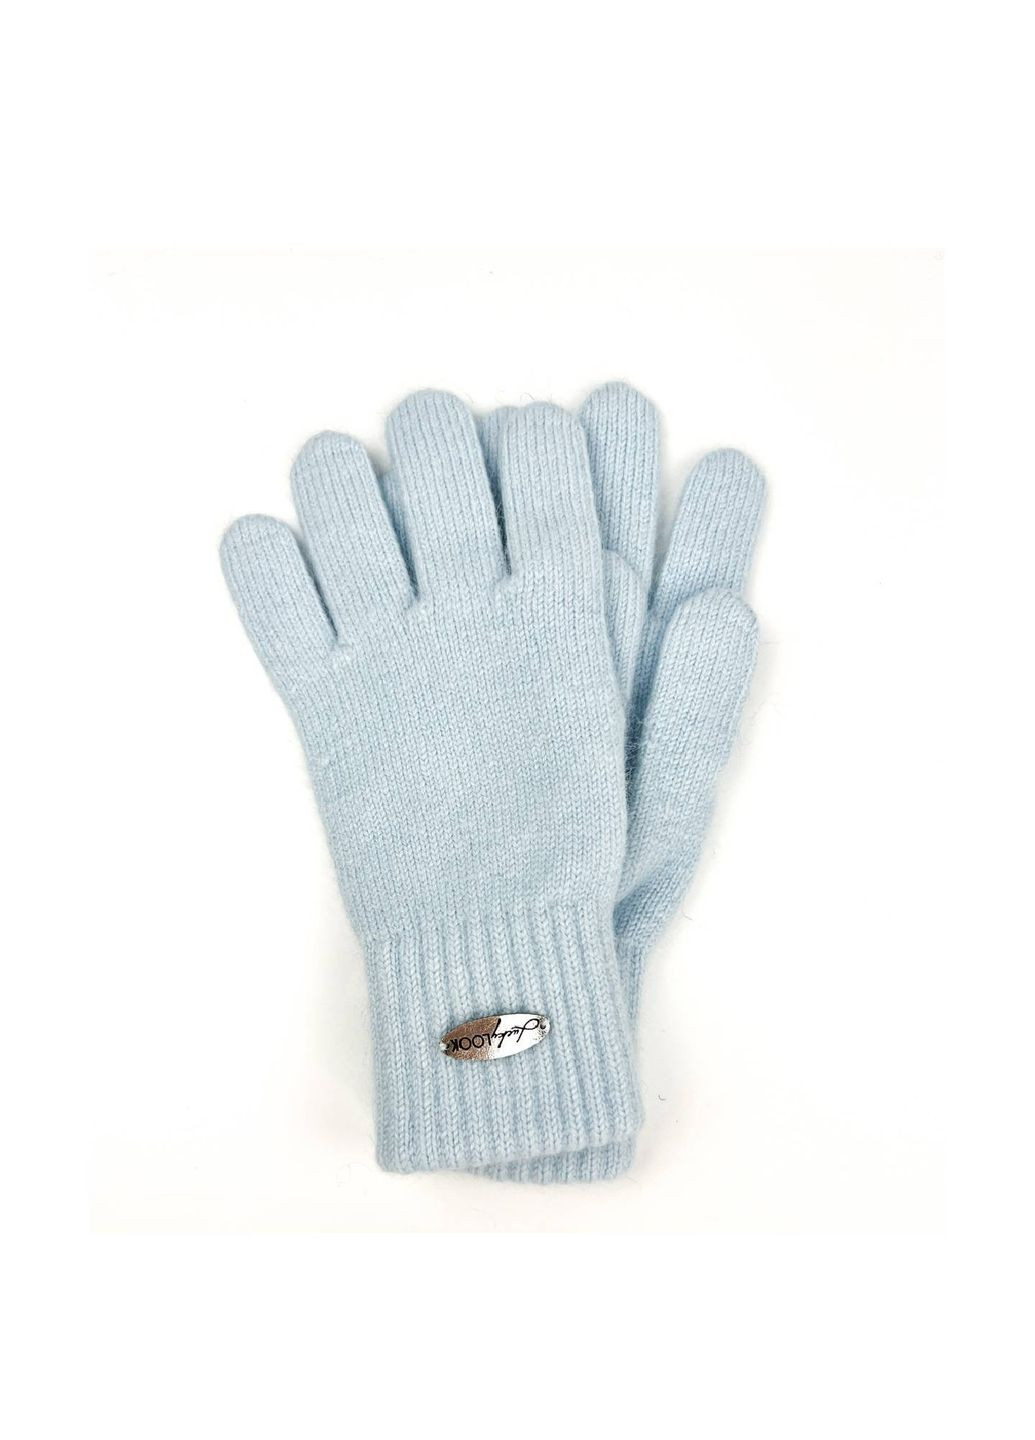 Перчатки женские ангора с вискозой голубые MERLYN LuckyLOOK 255-227 (290278112)